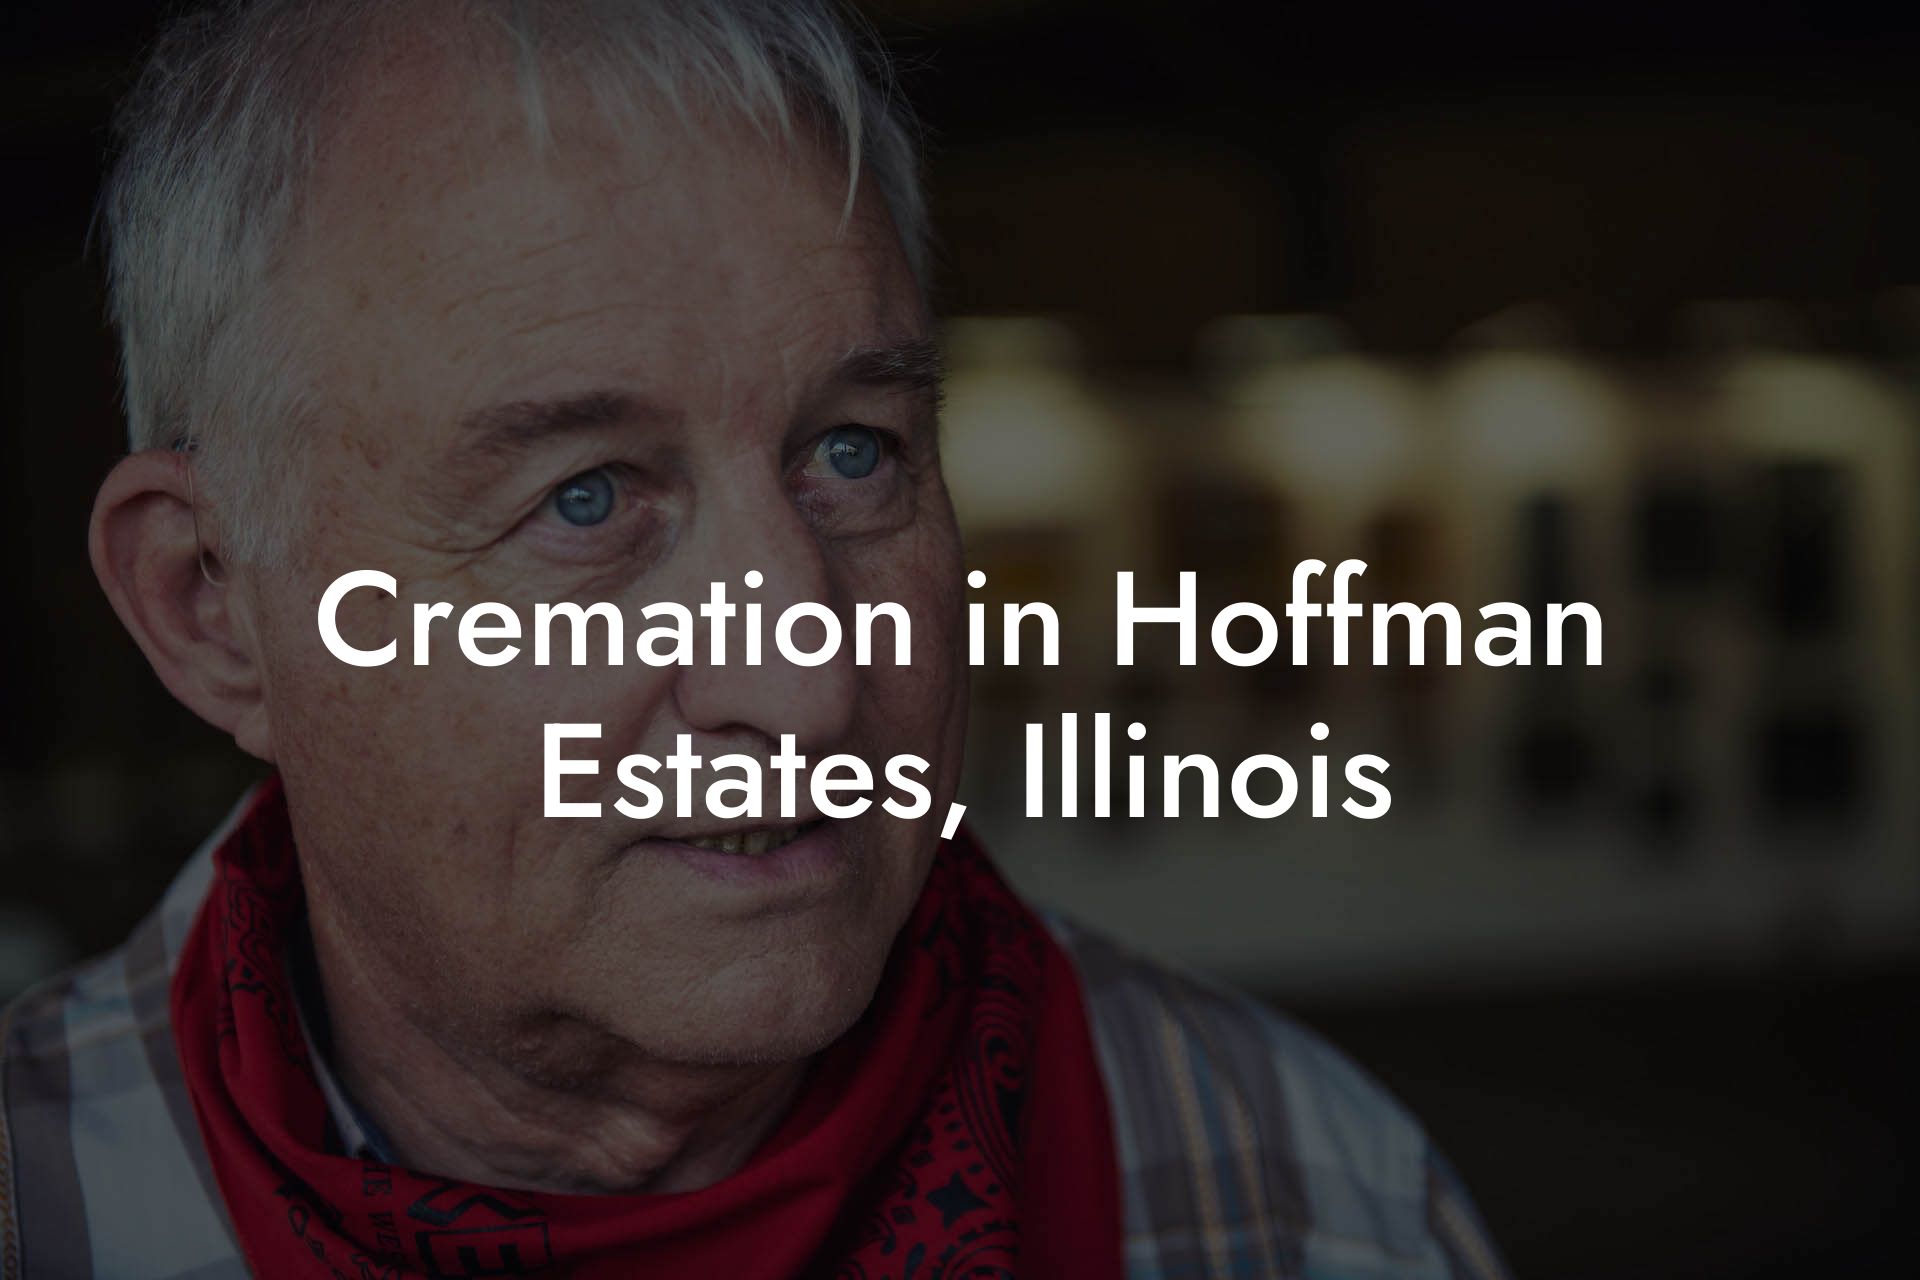 Cremation in Hoffman Estates, Illinois